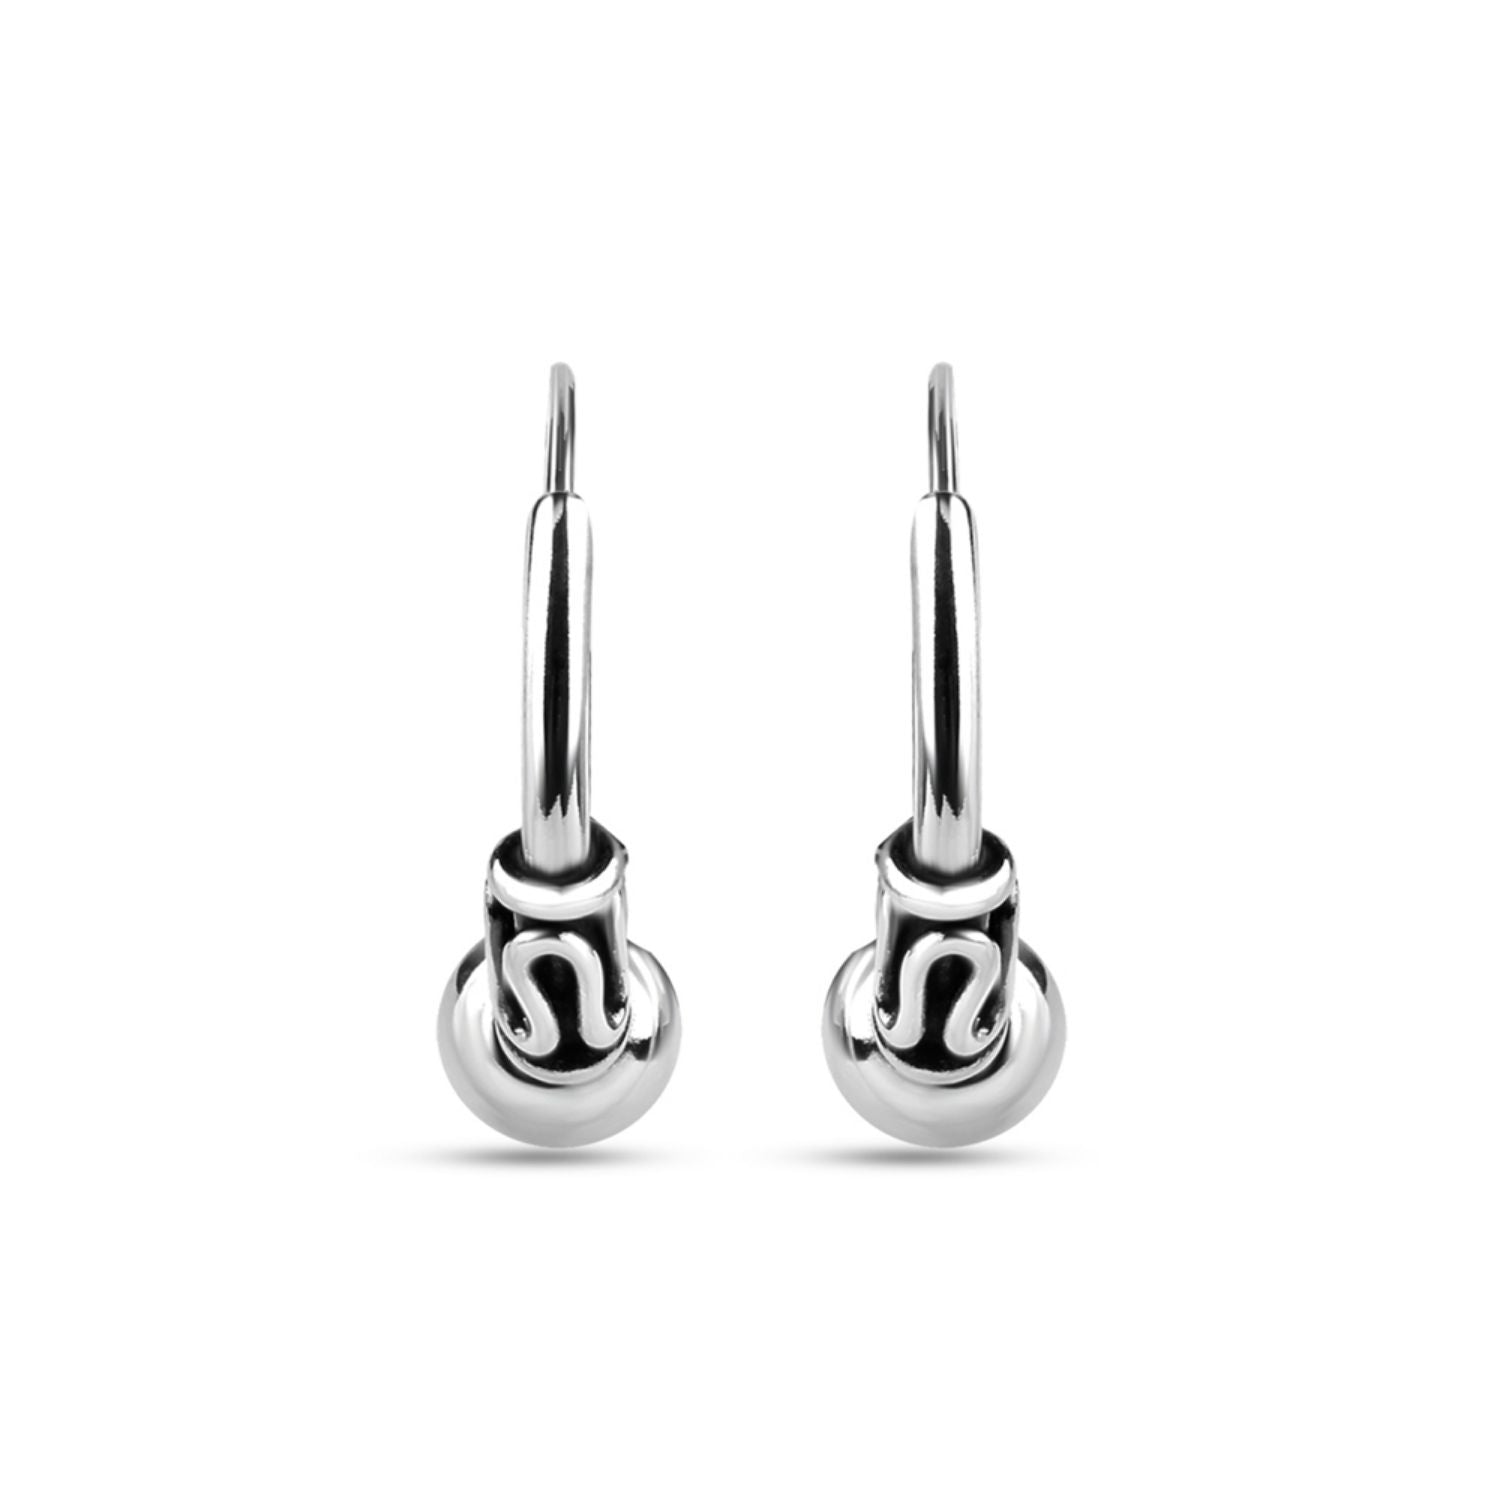 925 Sterling Silver Hoop Earrings for Cartilage Nose Lips for Men